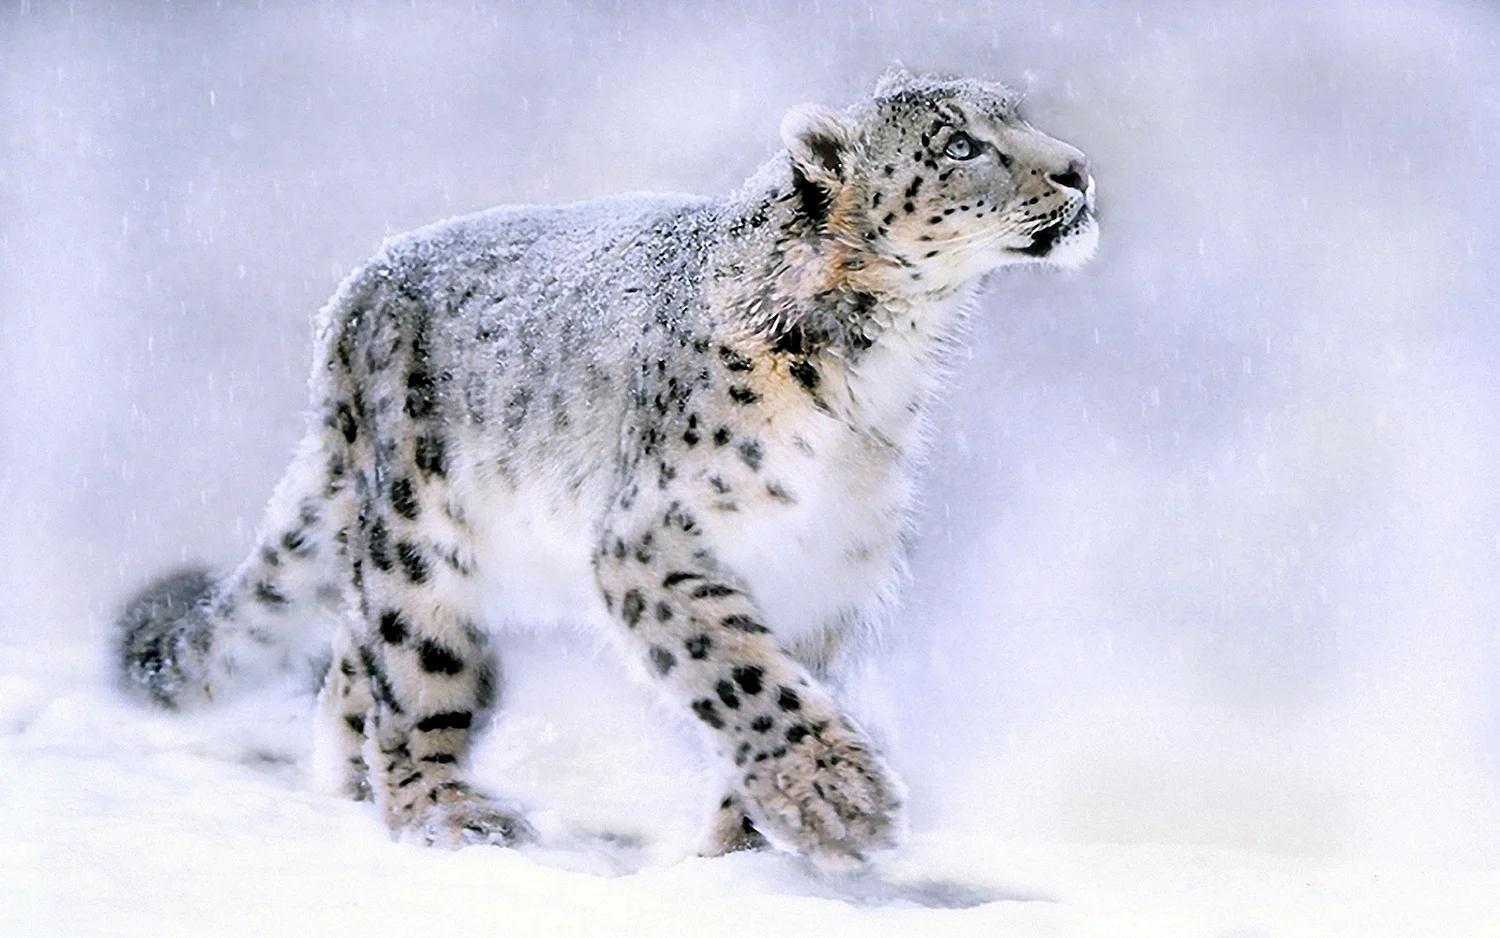 Снежный Барс и леопард